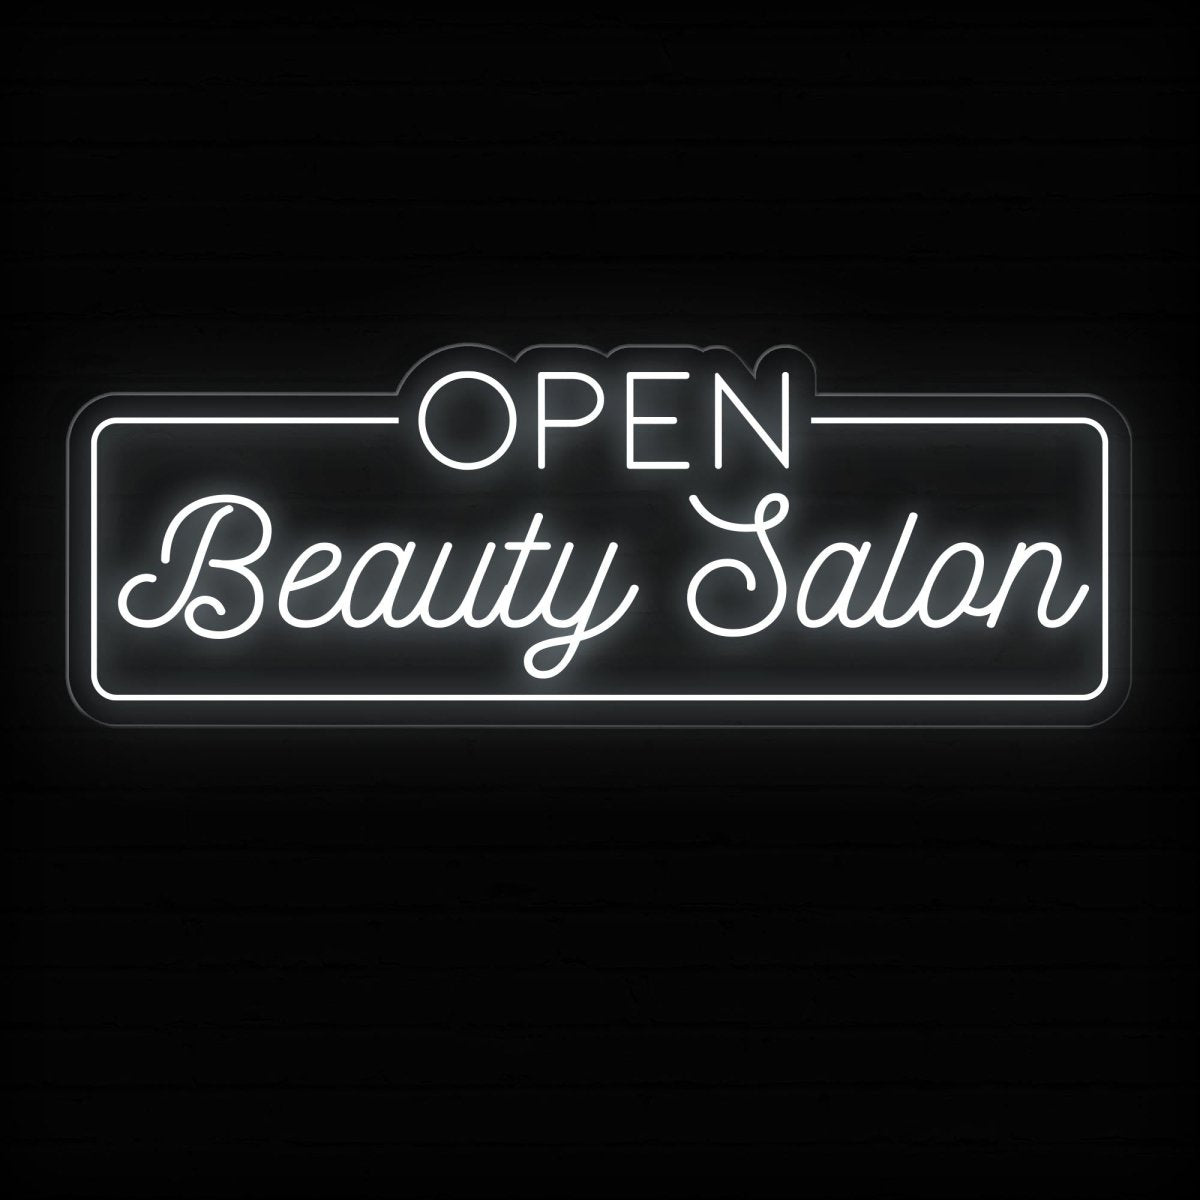 Open Beauty Salon Neon Sign - LED Light for Stylish Business Entrance - NEONXPERT